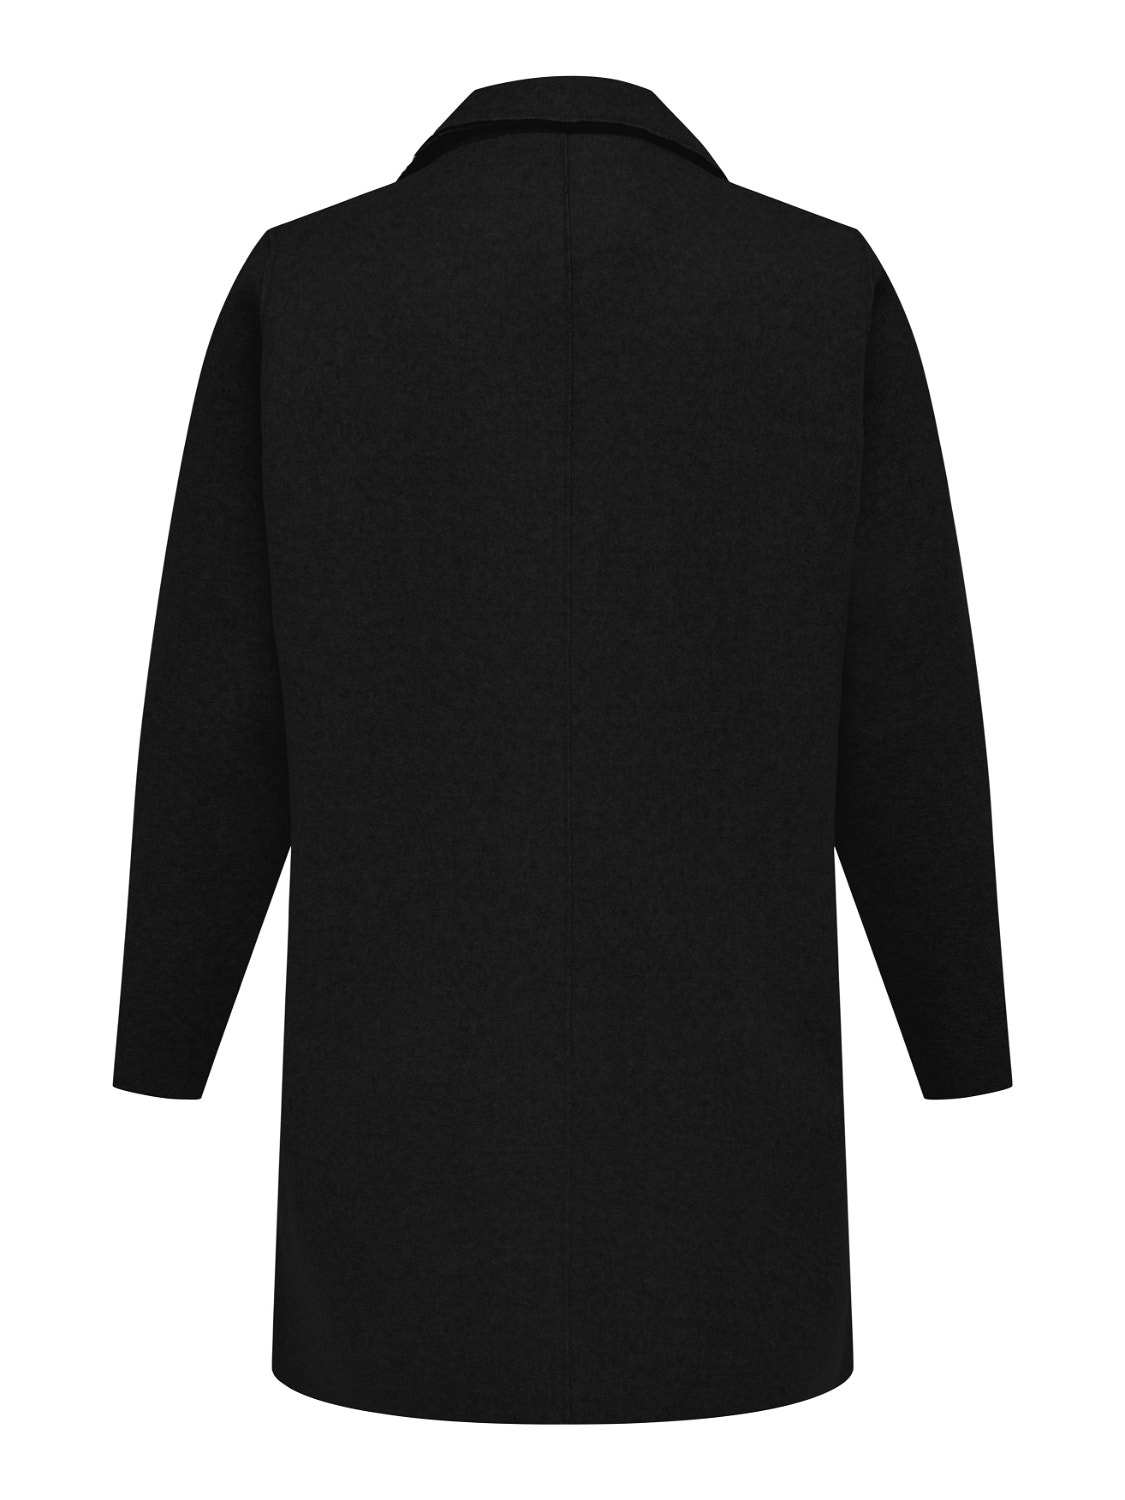 ONLY Reverse Coat -Black - 15233006